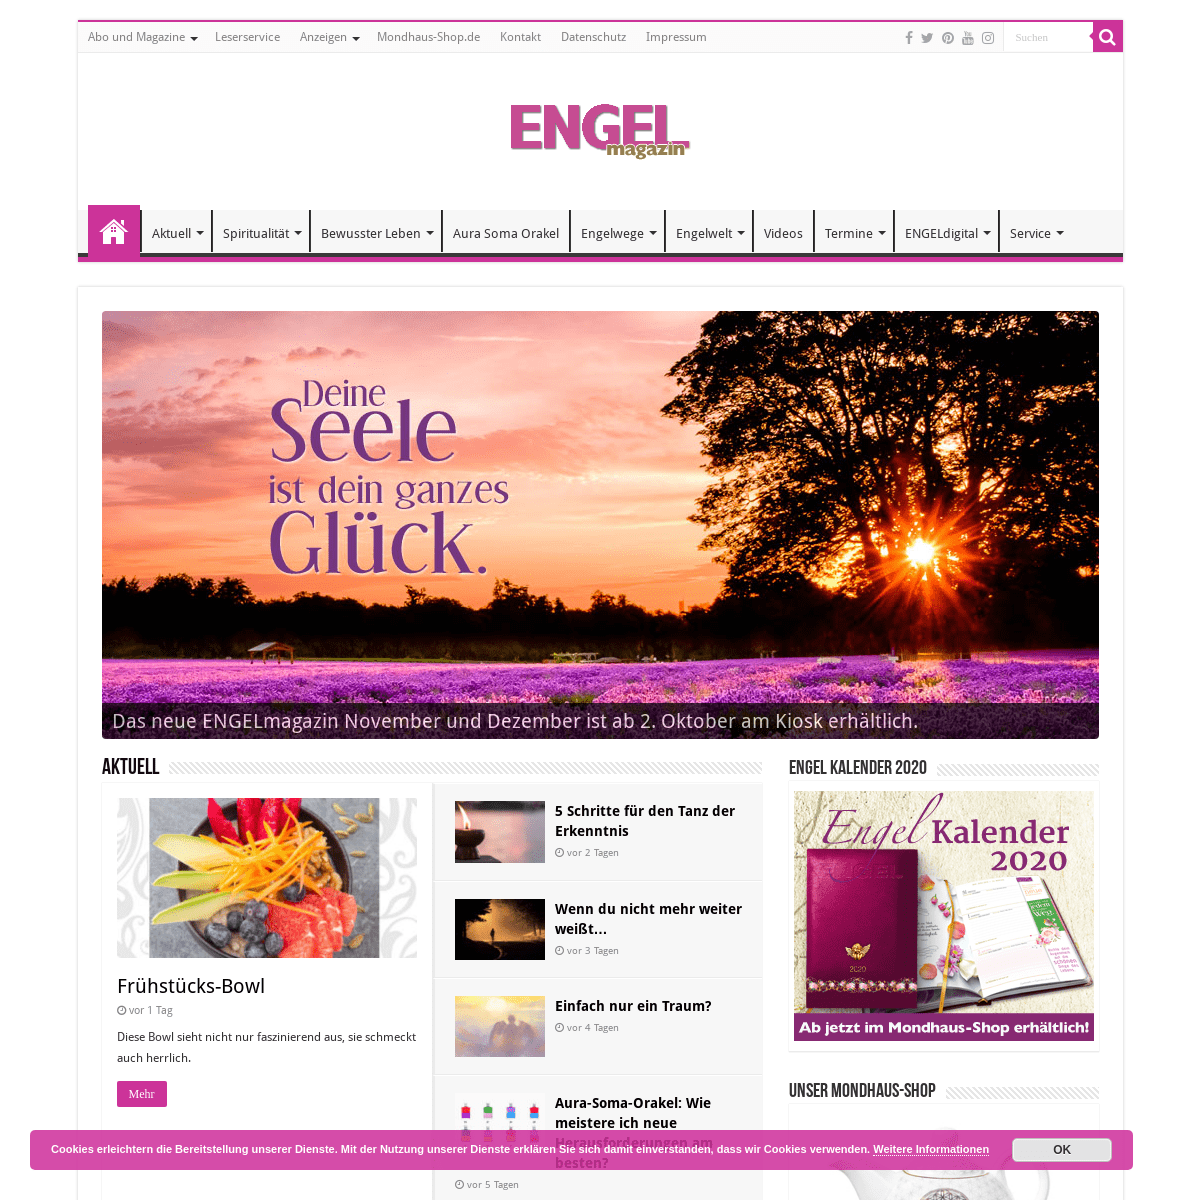 A complete backup of engelmagazin.de